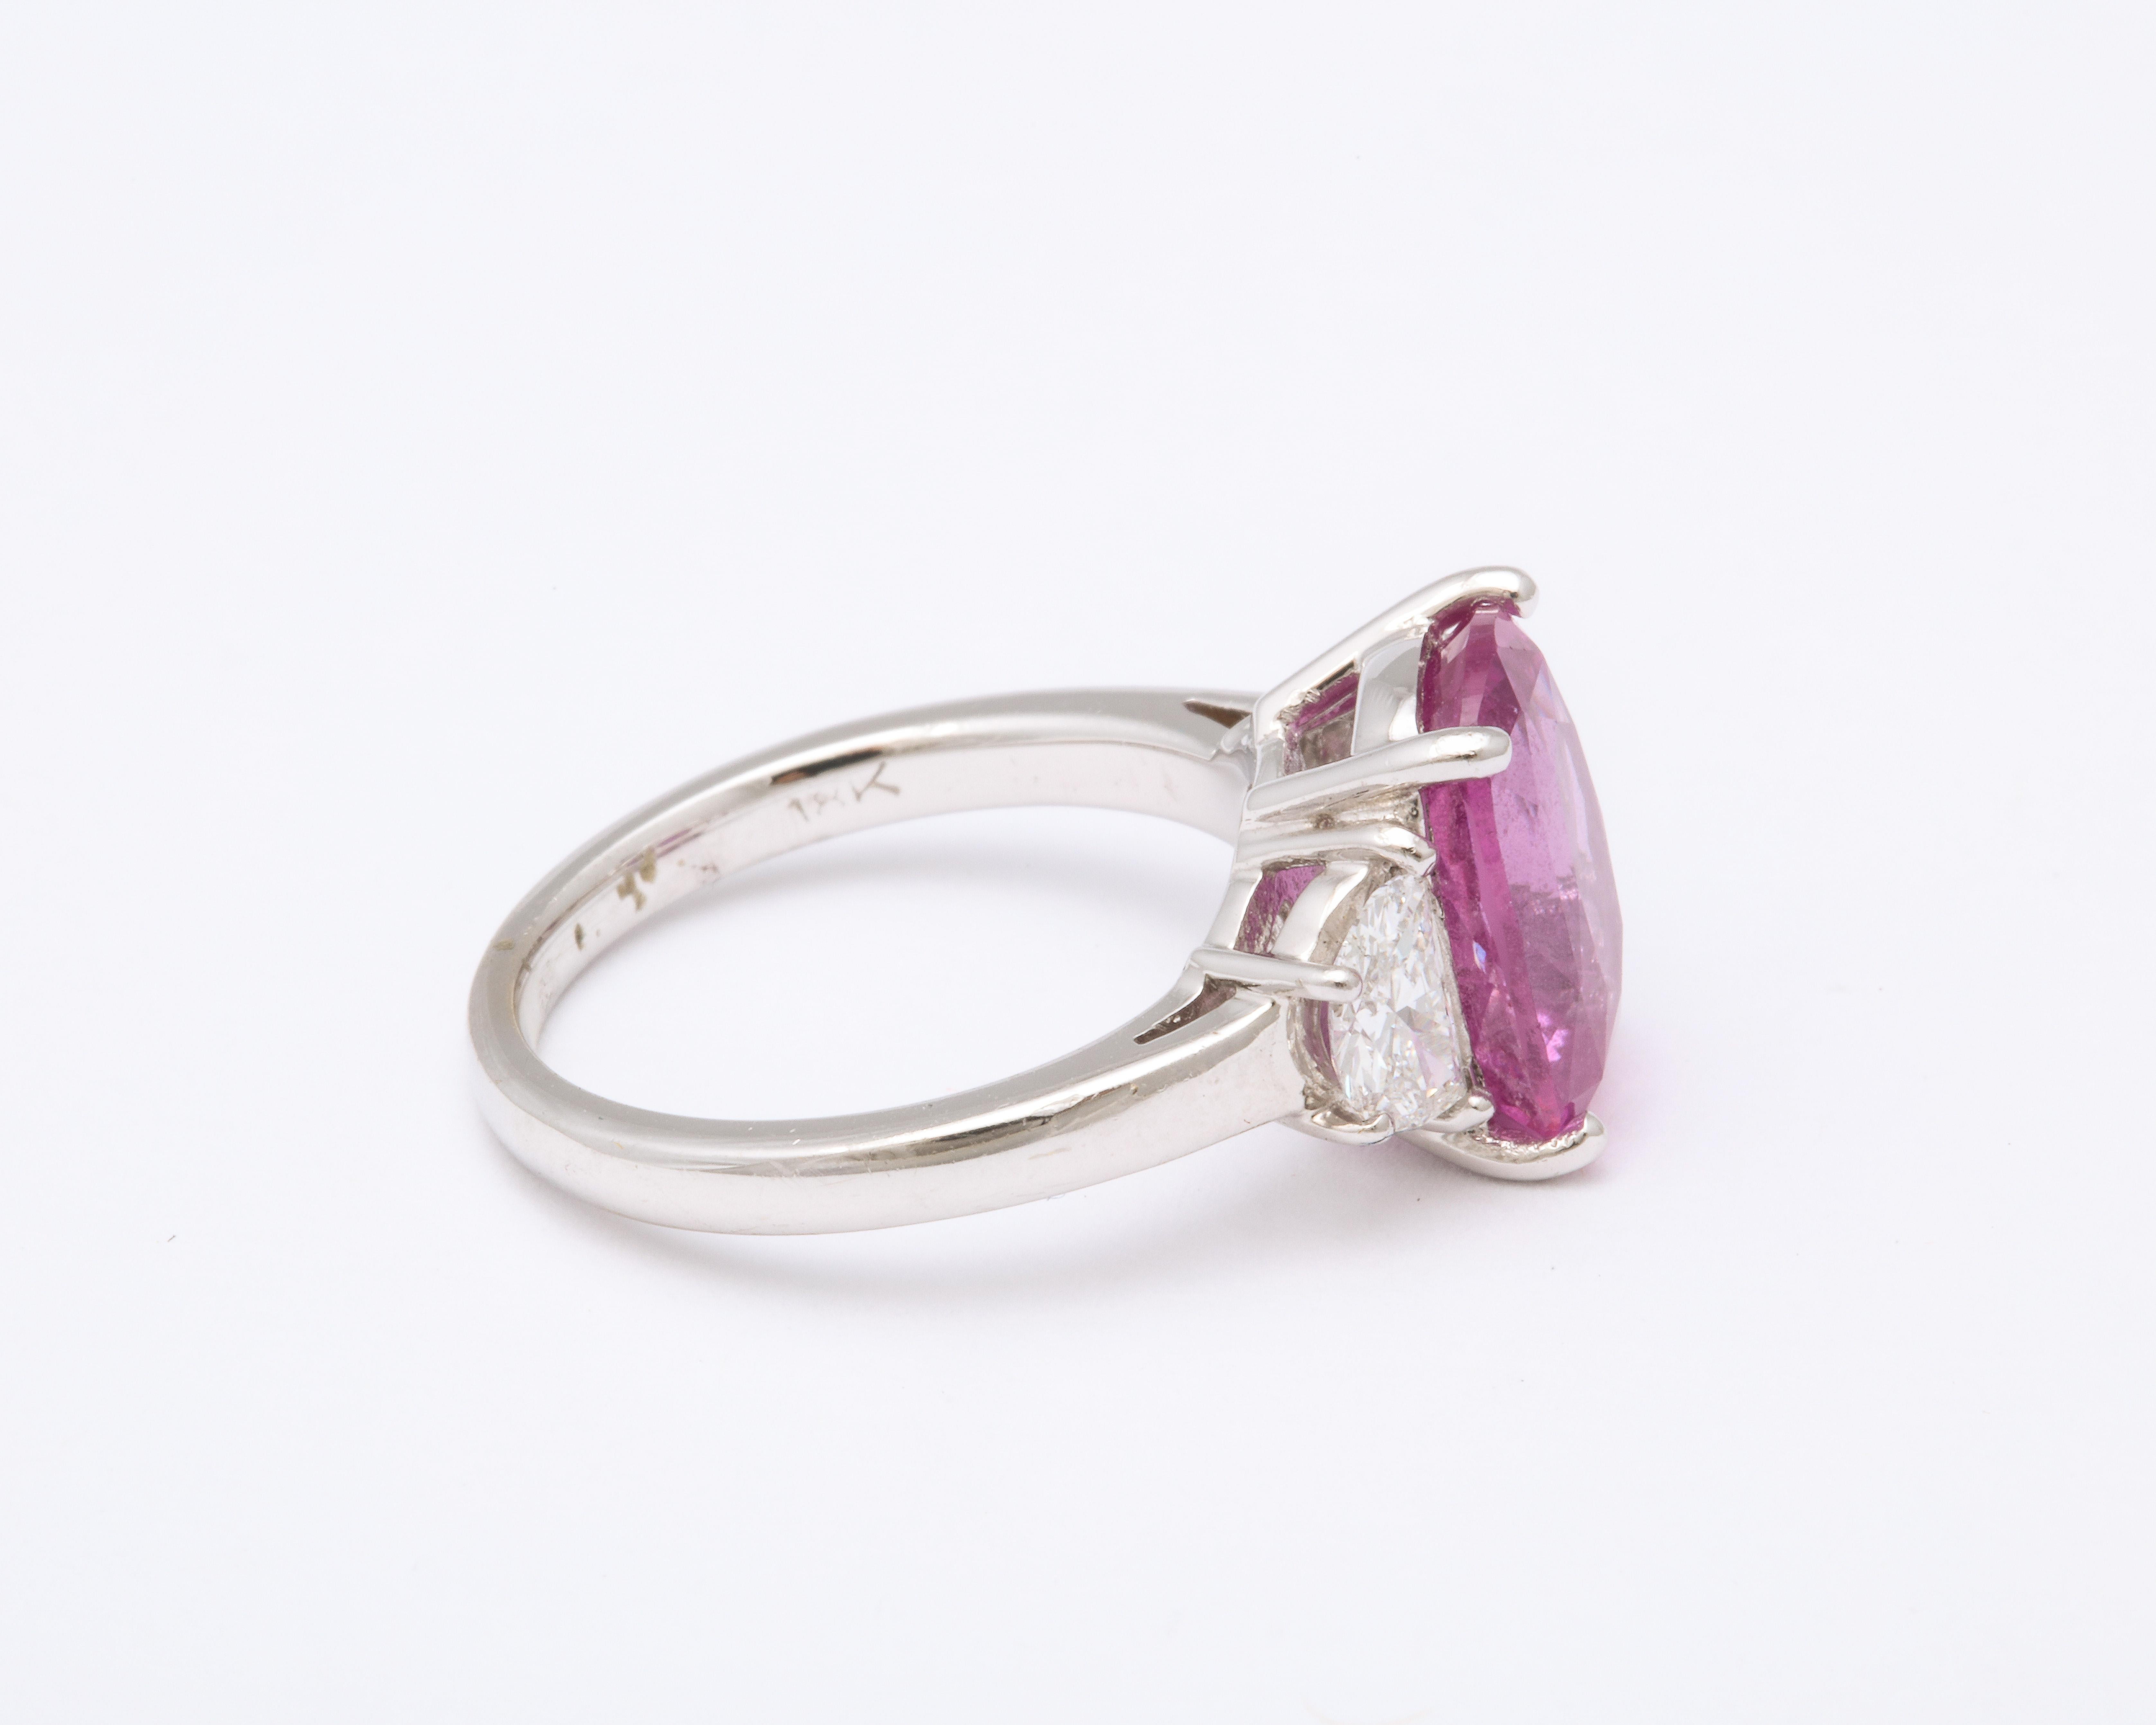 5 carat pink sapphire ring